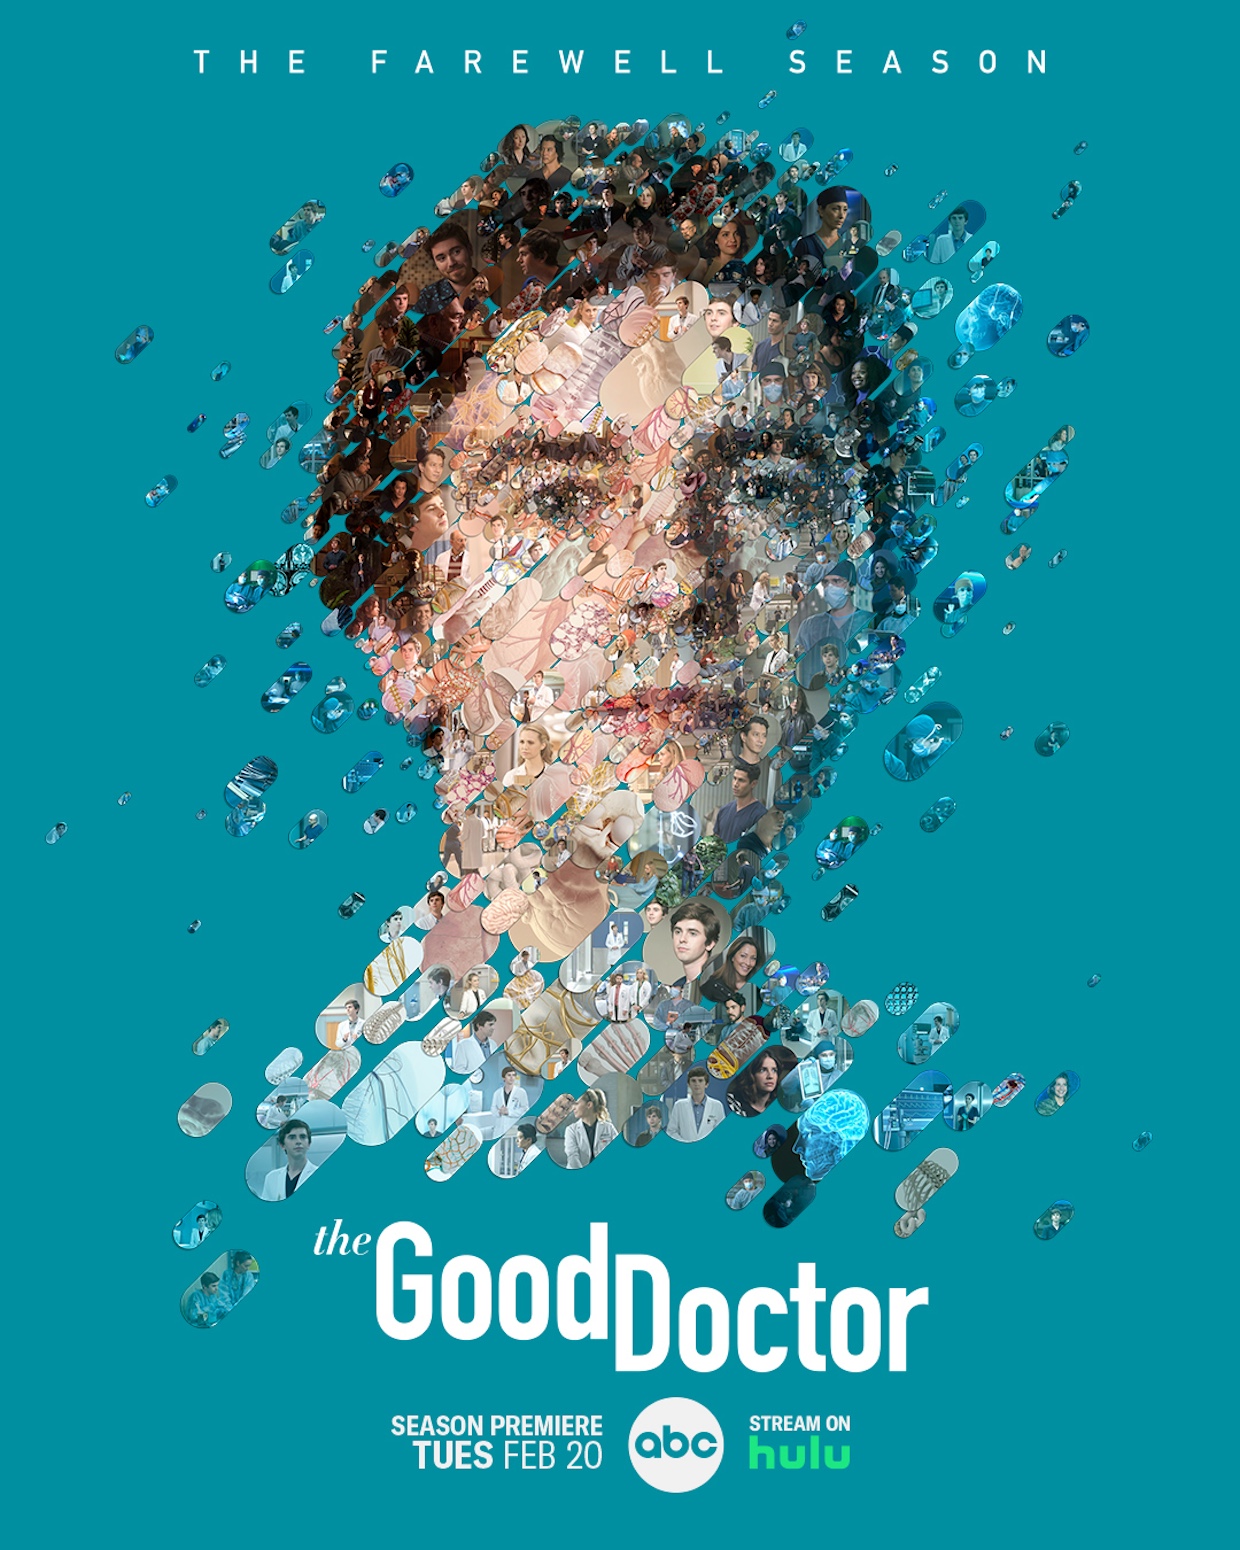 The Good Doctor Season 7 Premiere, Episode 1 Release Date